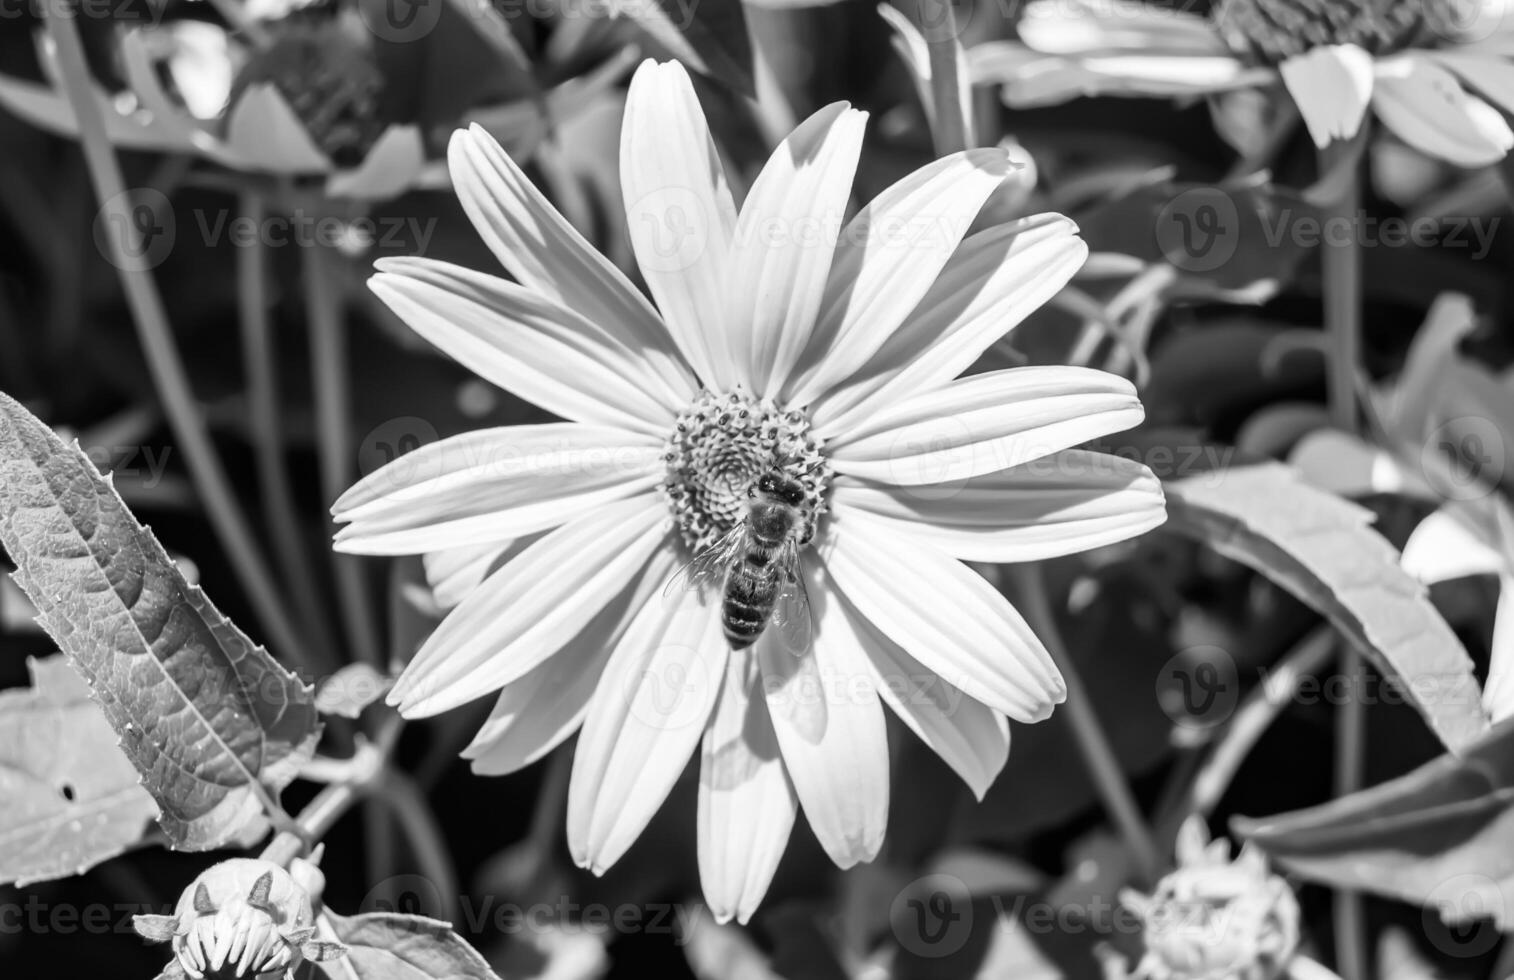 belle fleur sauvage ailé abeille sur fond feuillage prairie photo